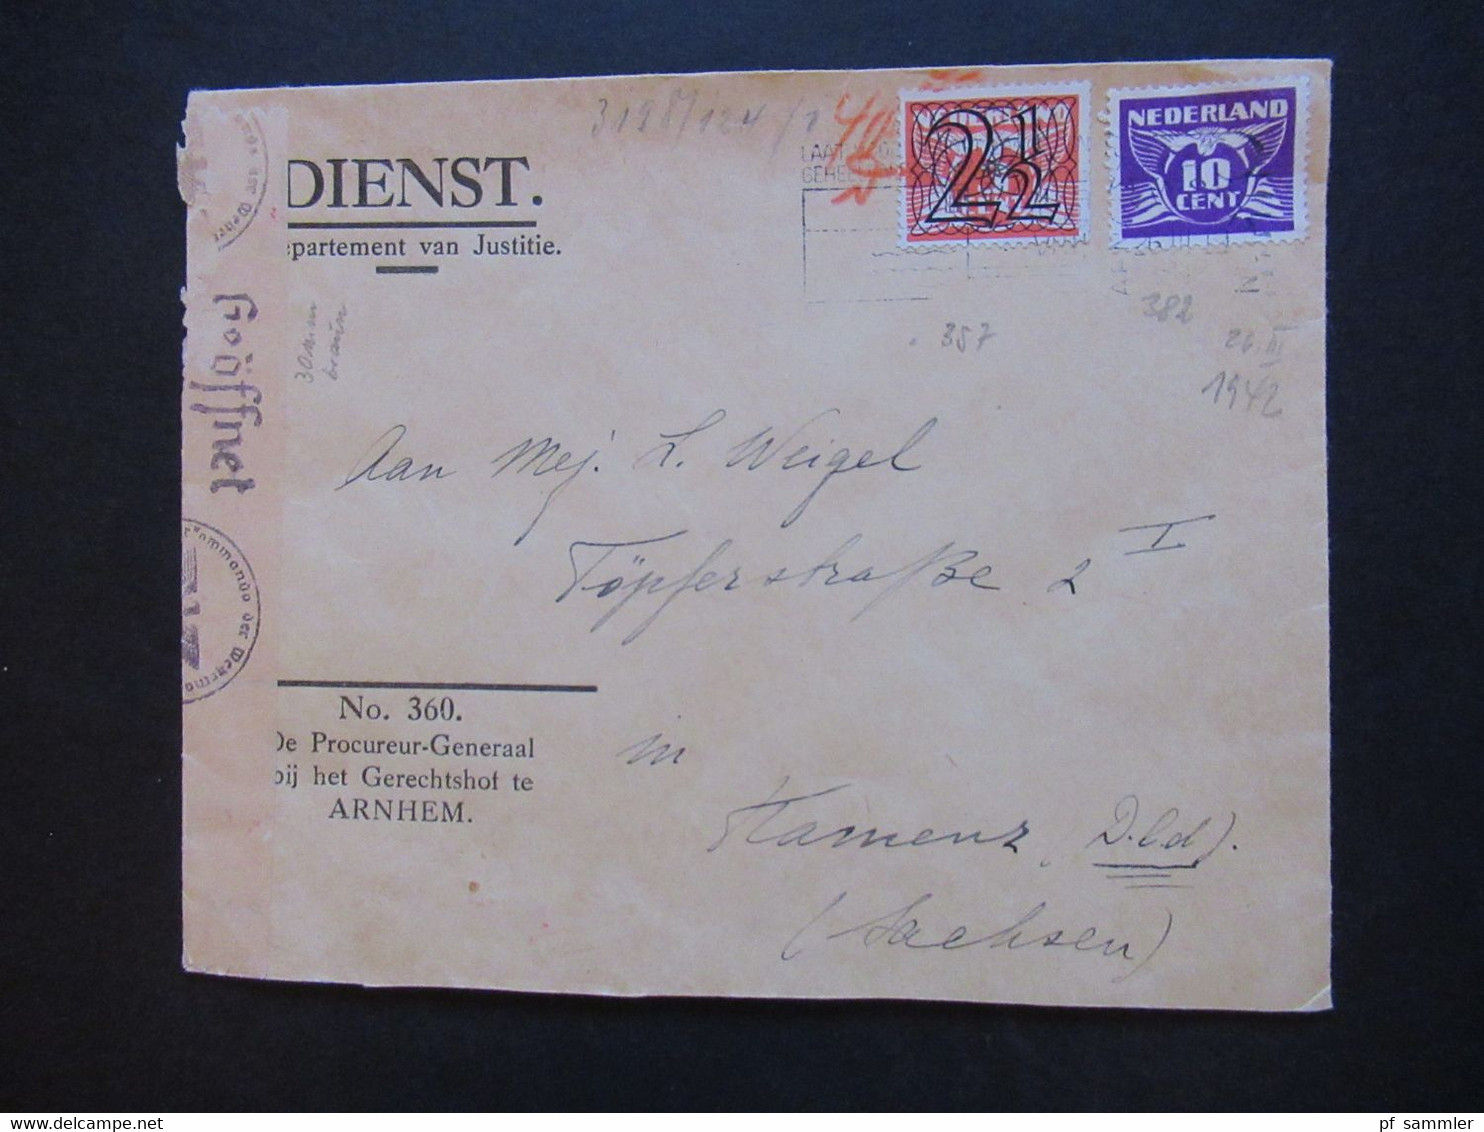 Niederlande 1942 OKW Zensurbeleg Geöffnet Umschlag Dienst Departement Van Justitie Procureur General Gerechtshof Arnhem - Briefe U. Dokumente